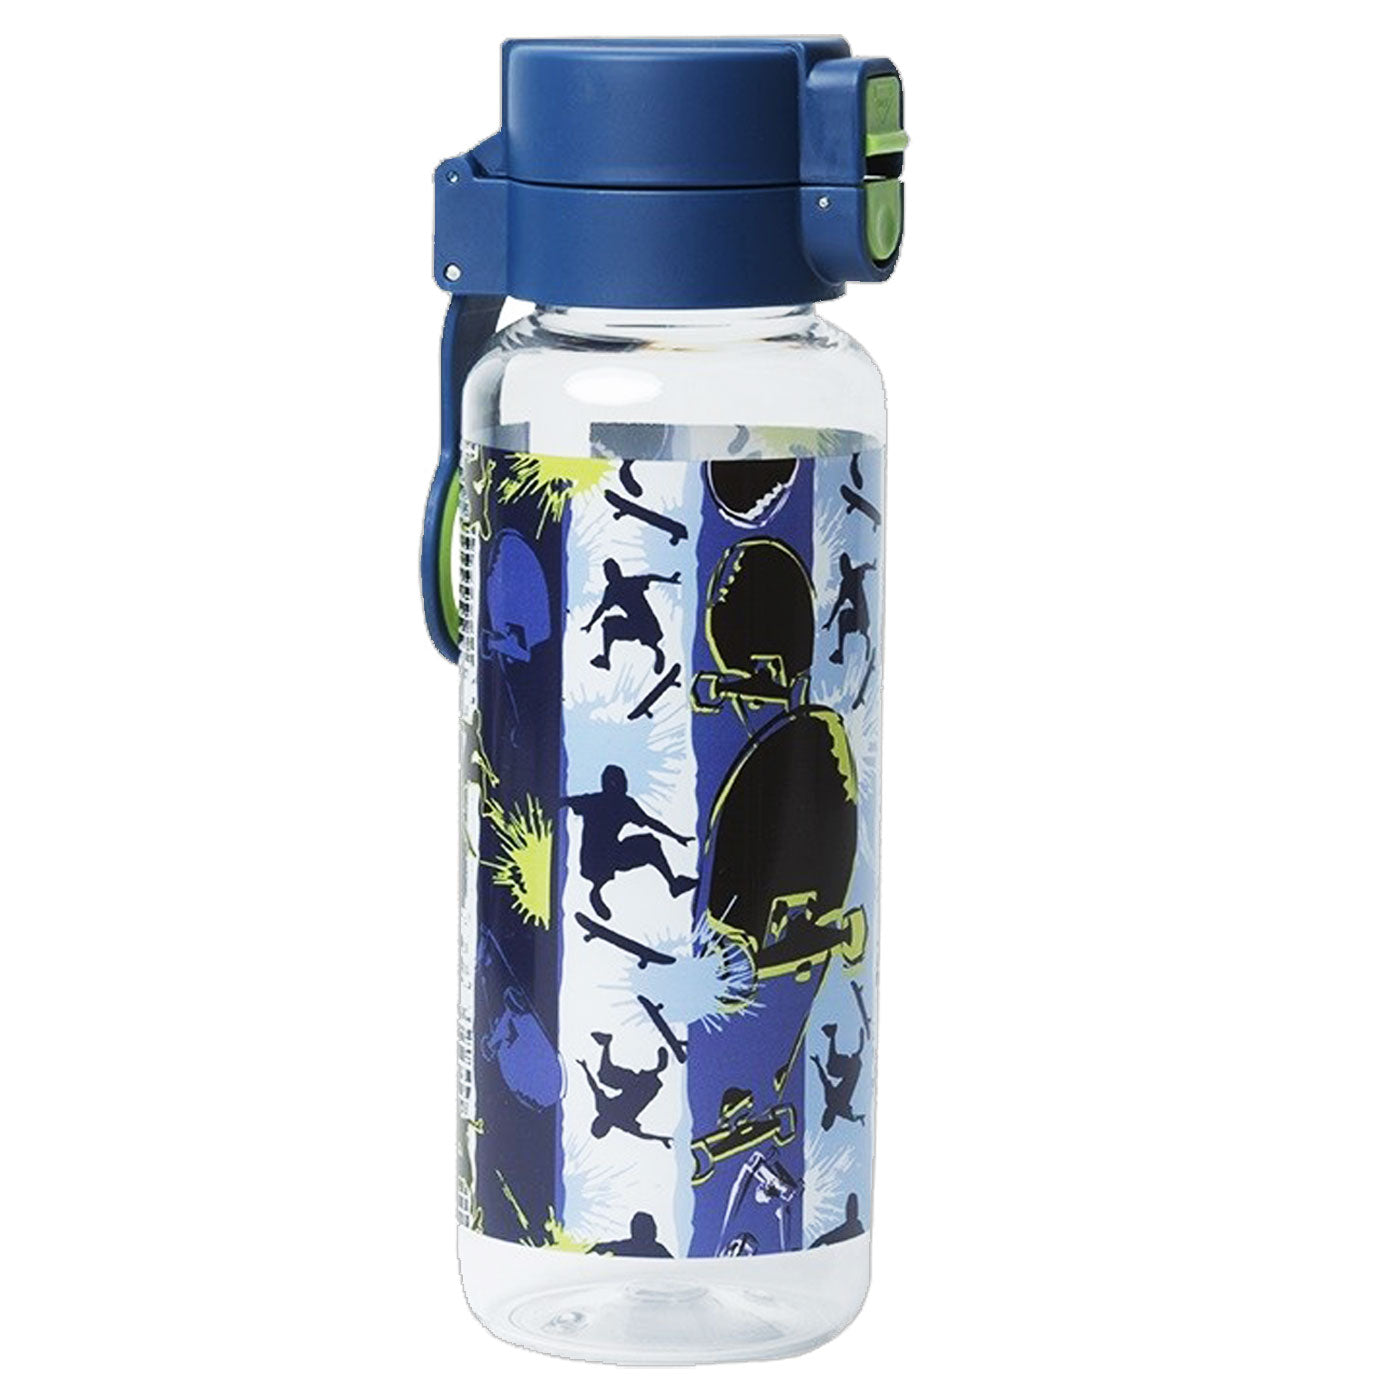 Spencil Spill-Proof Water Bottle 650 ml Skate Paint